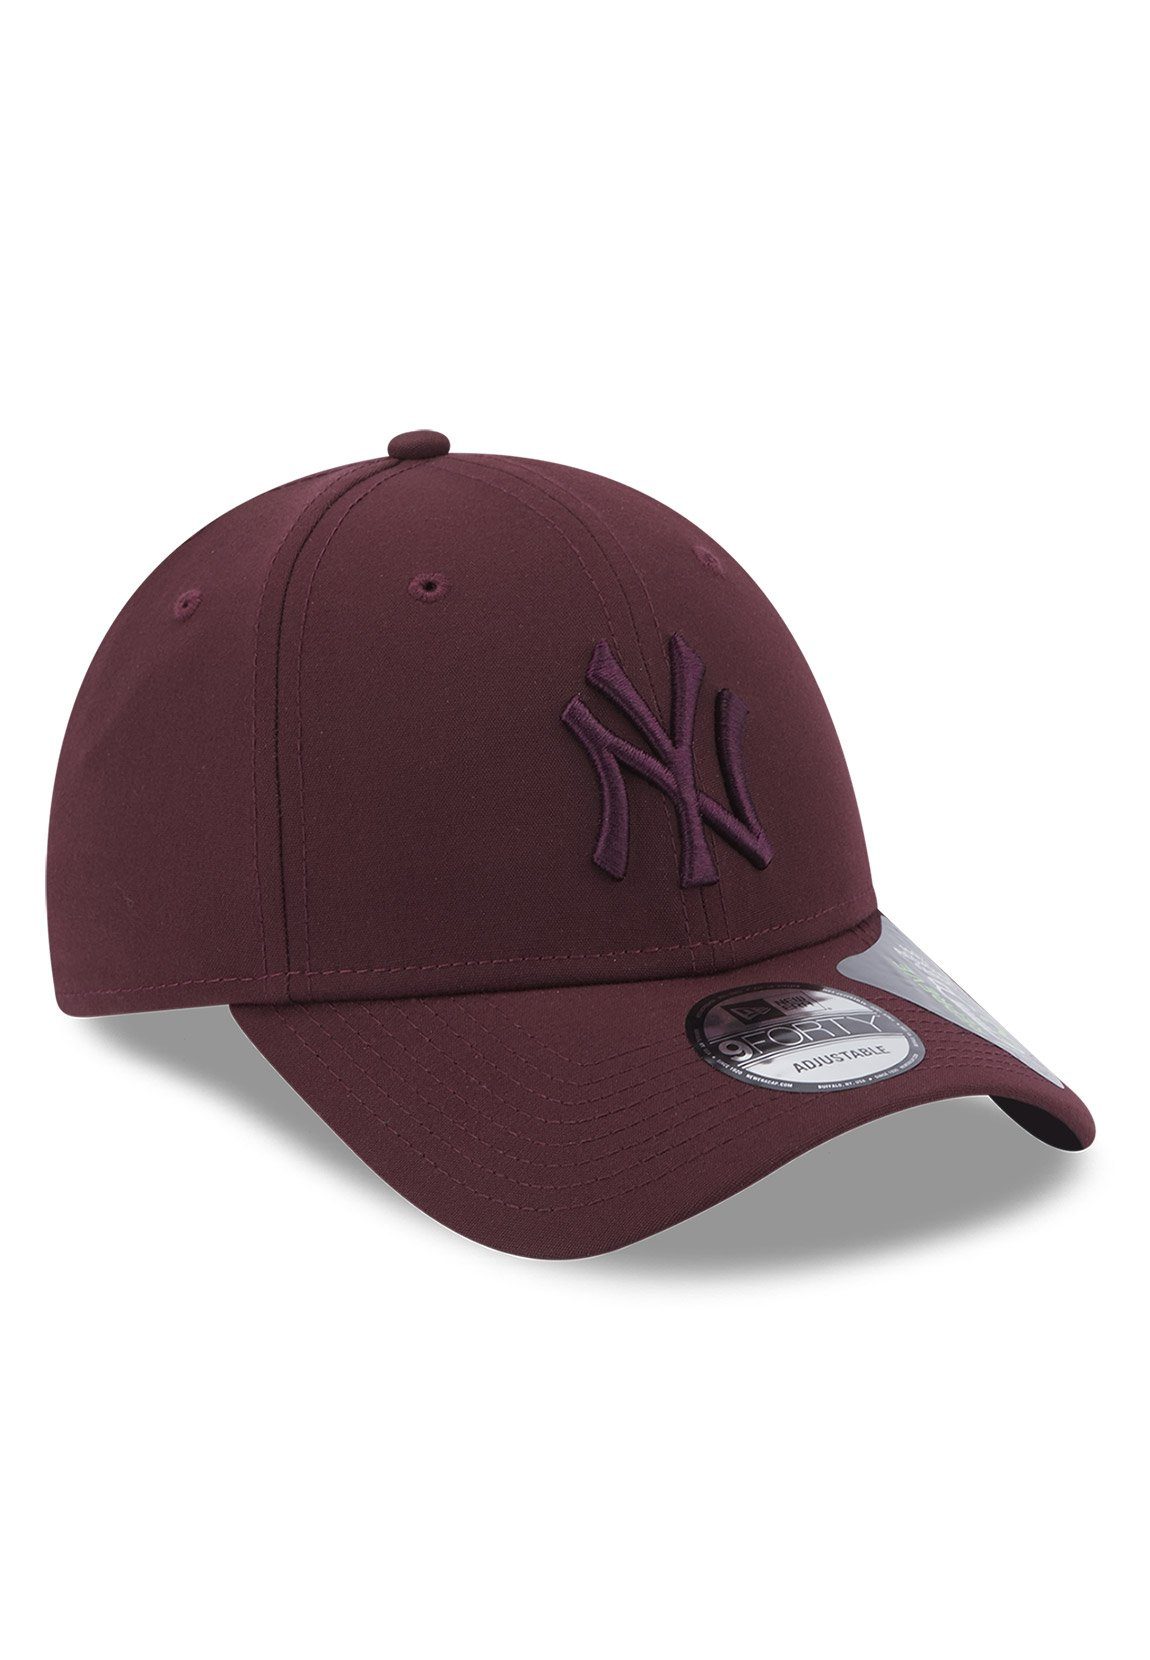 Repreve Dunkelrot Adjustable Baseball Cap Cap YANKEES New New Era 9Forty Era NY